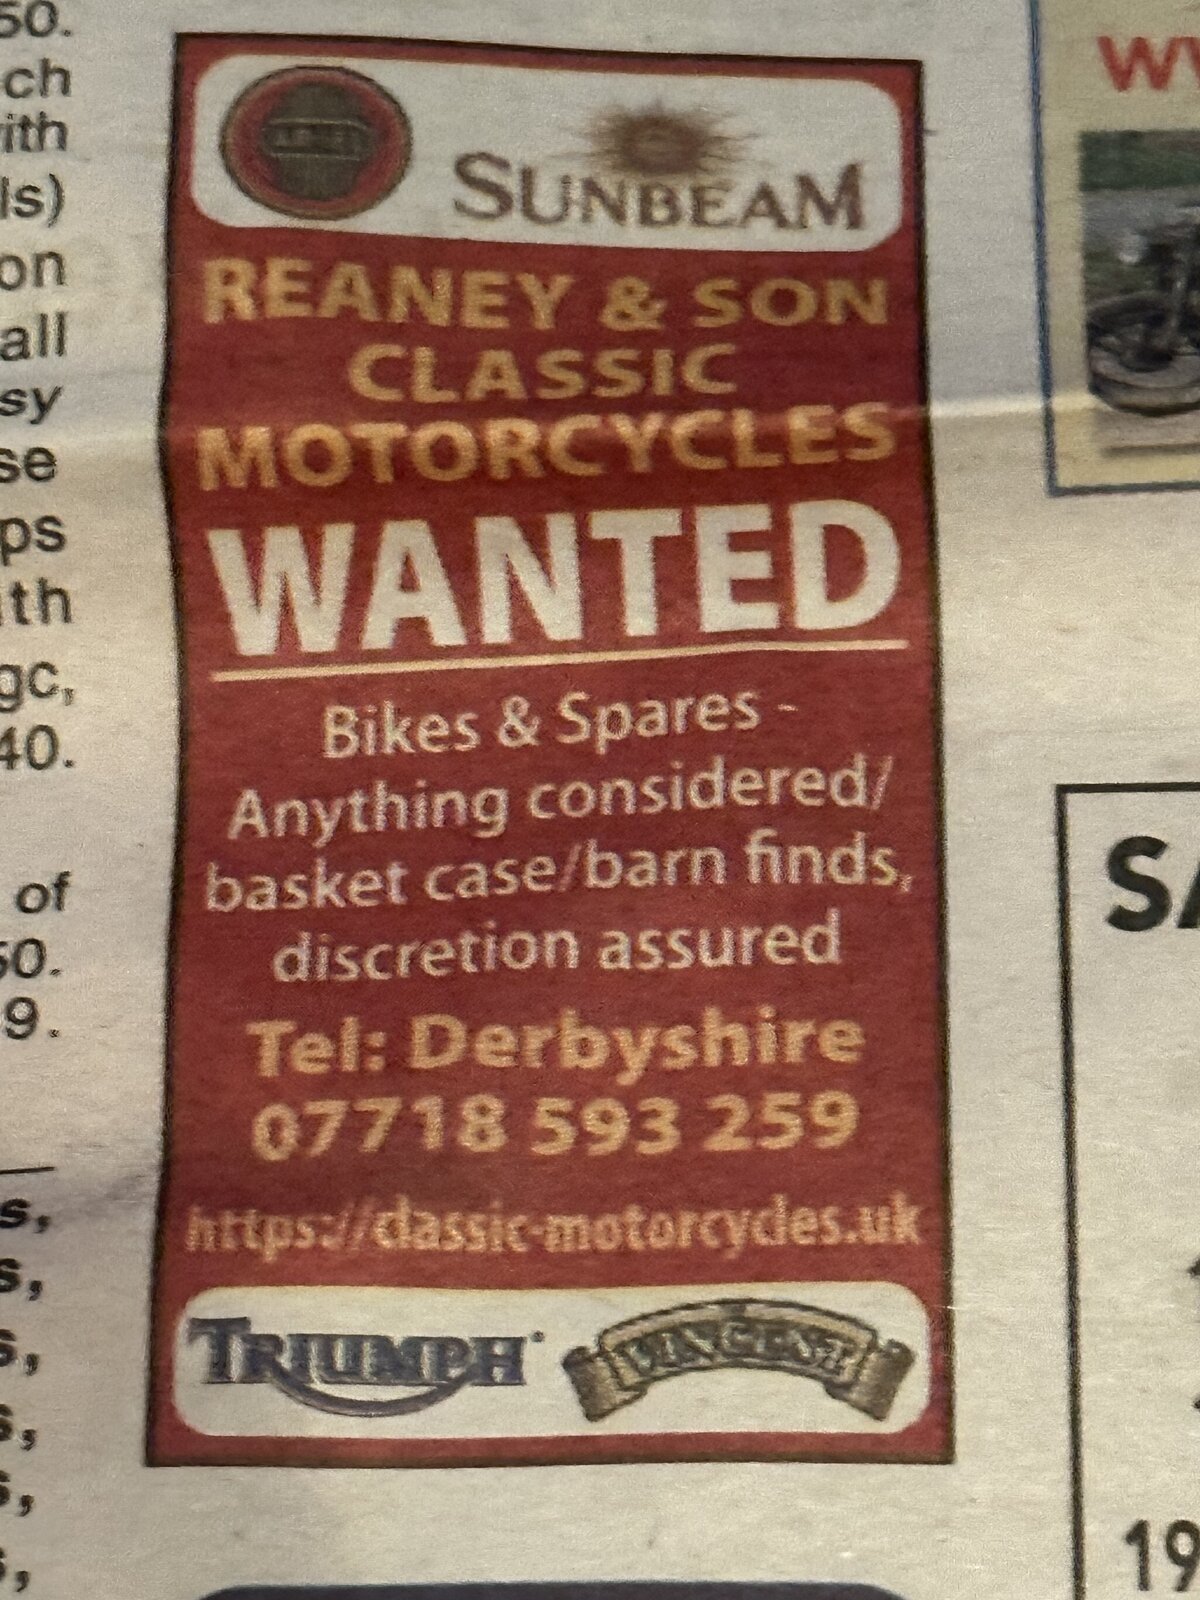 "Discretion assured" moto buyer services